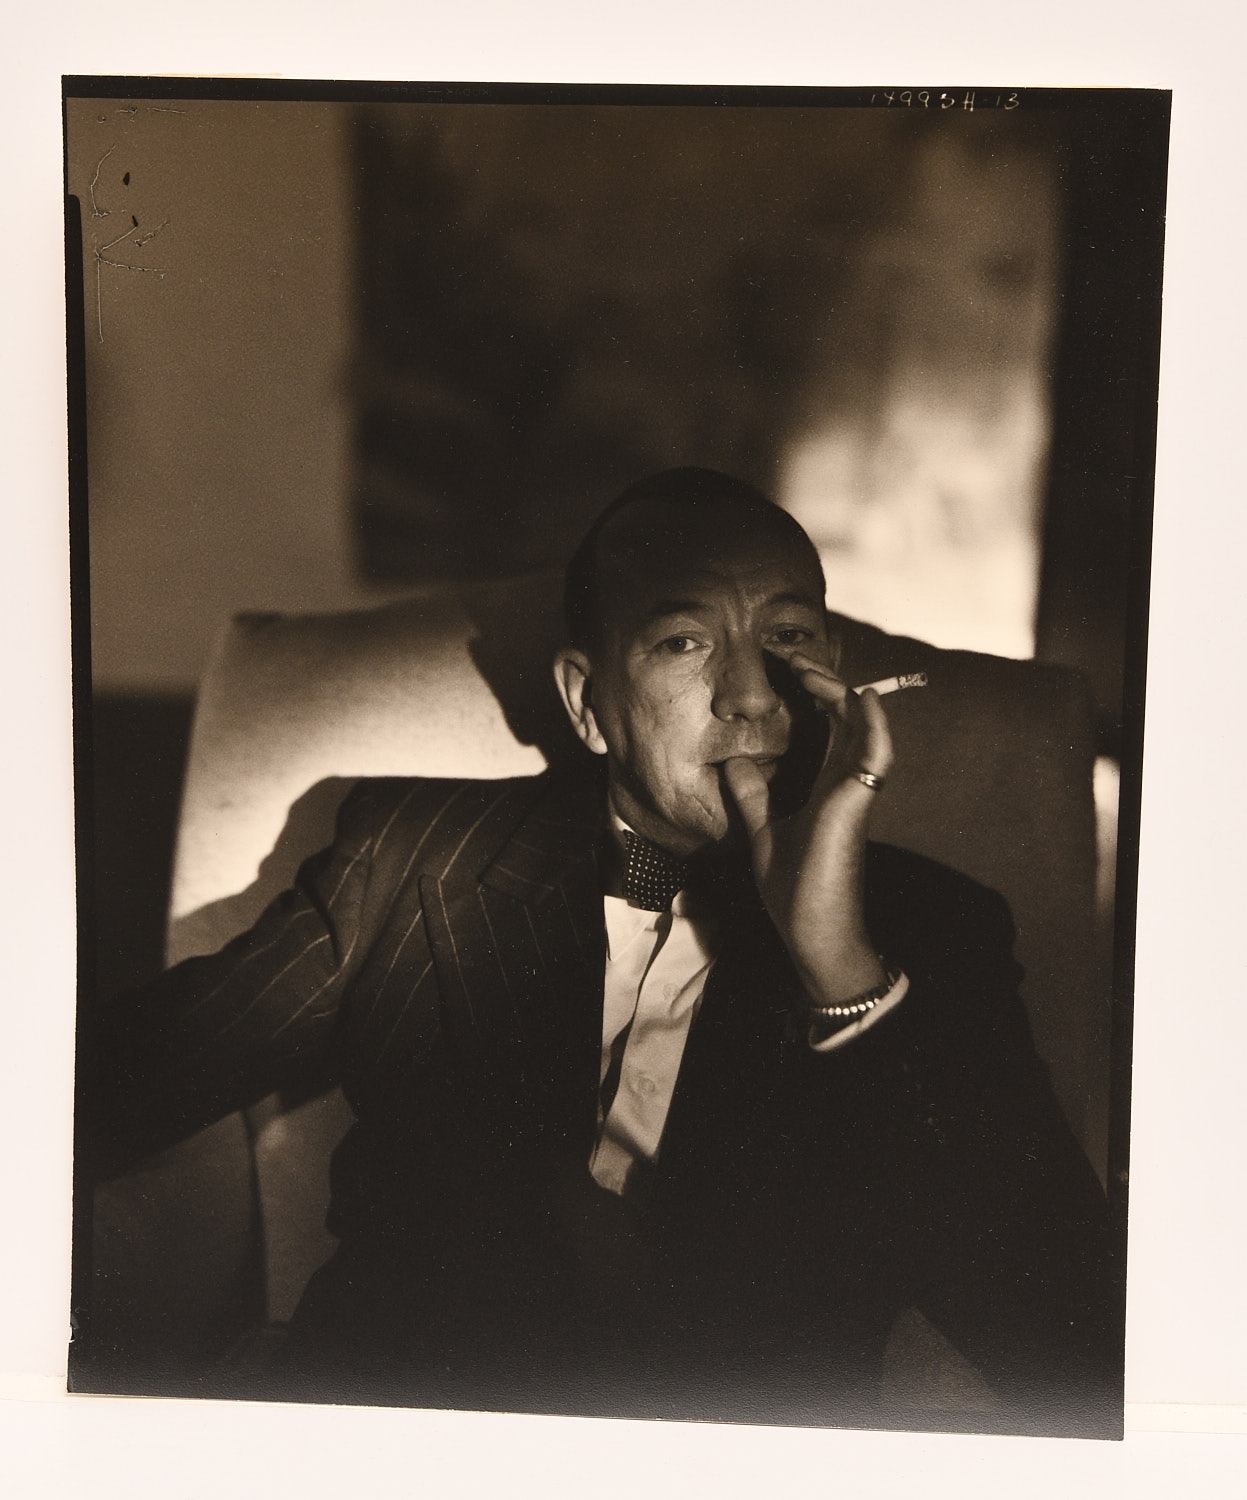 photograph by Horst P. Horst, 1940